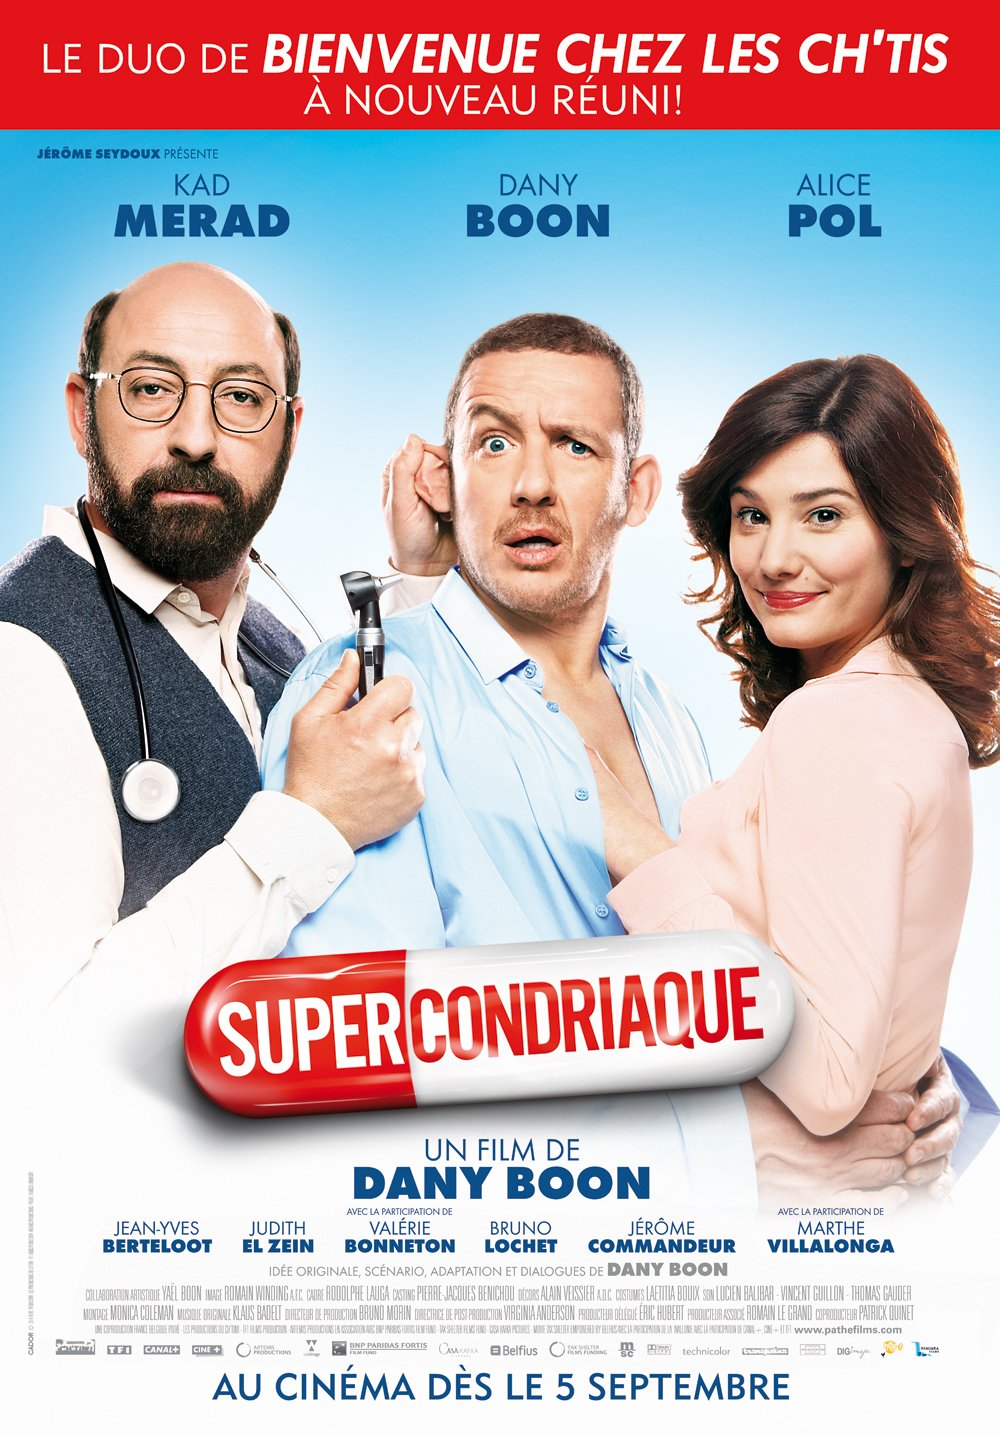 Poster of the movie Supercondriaque